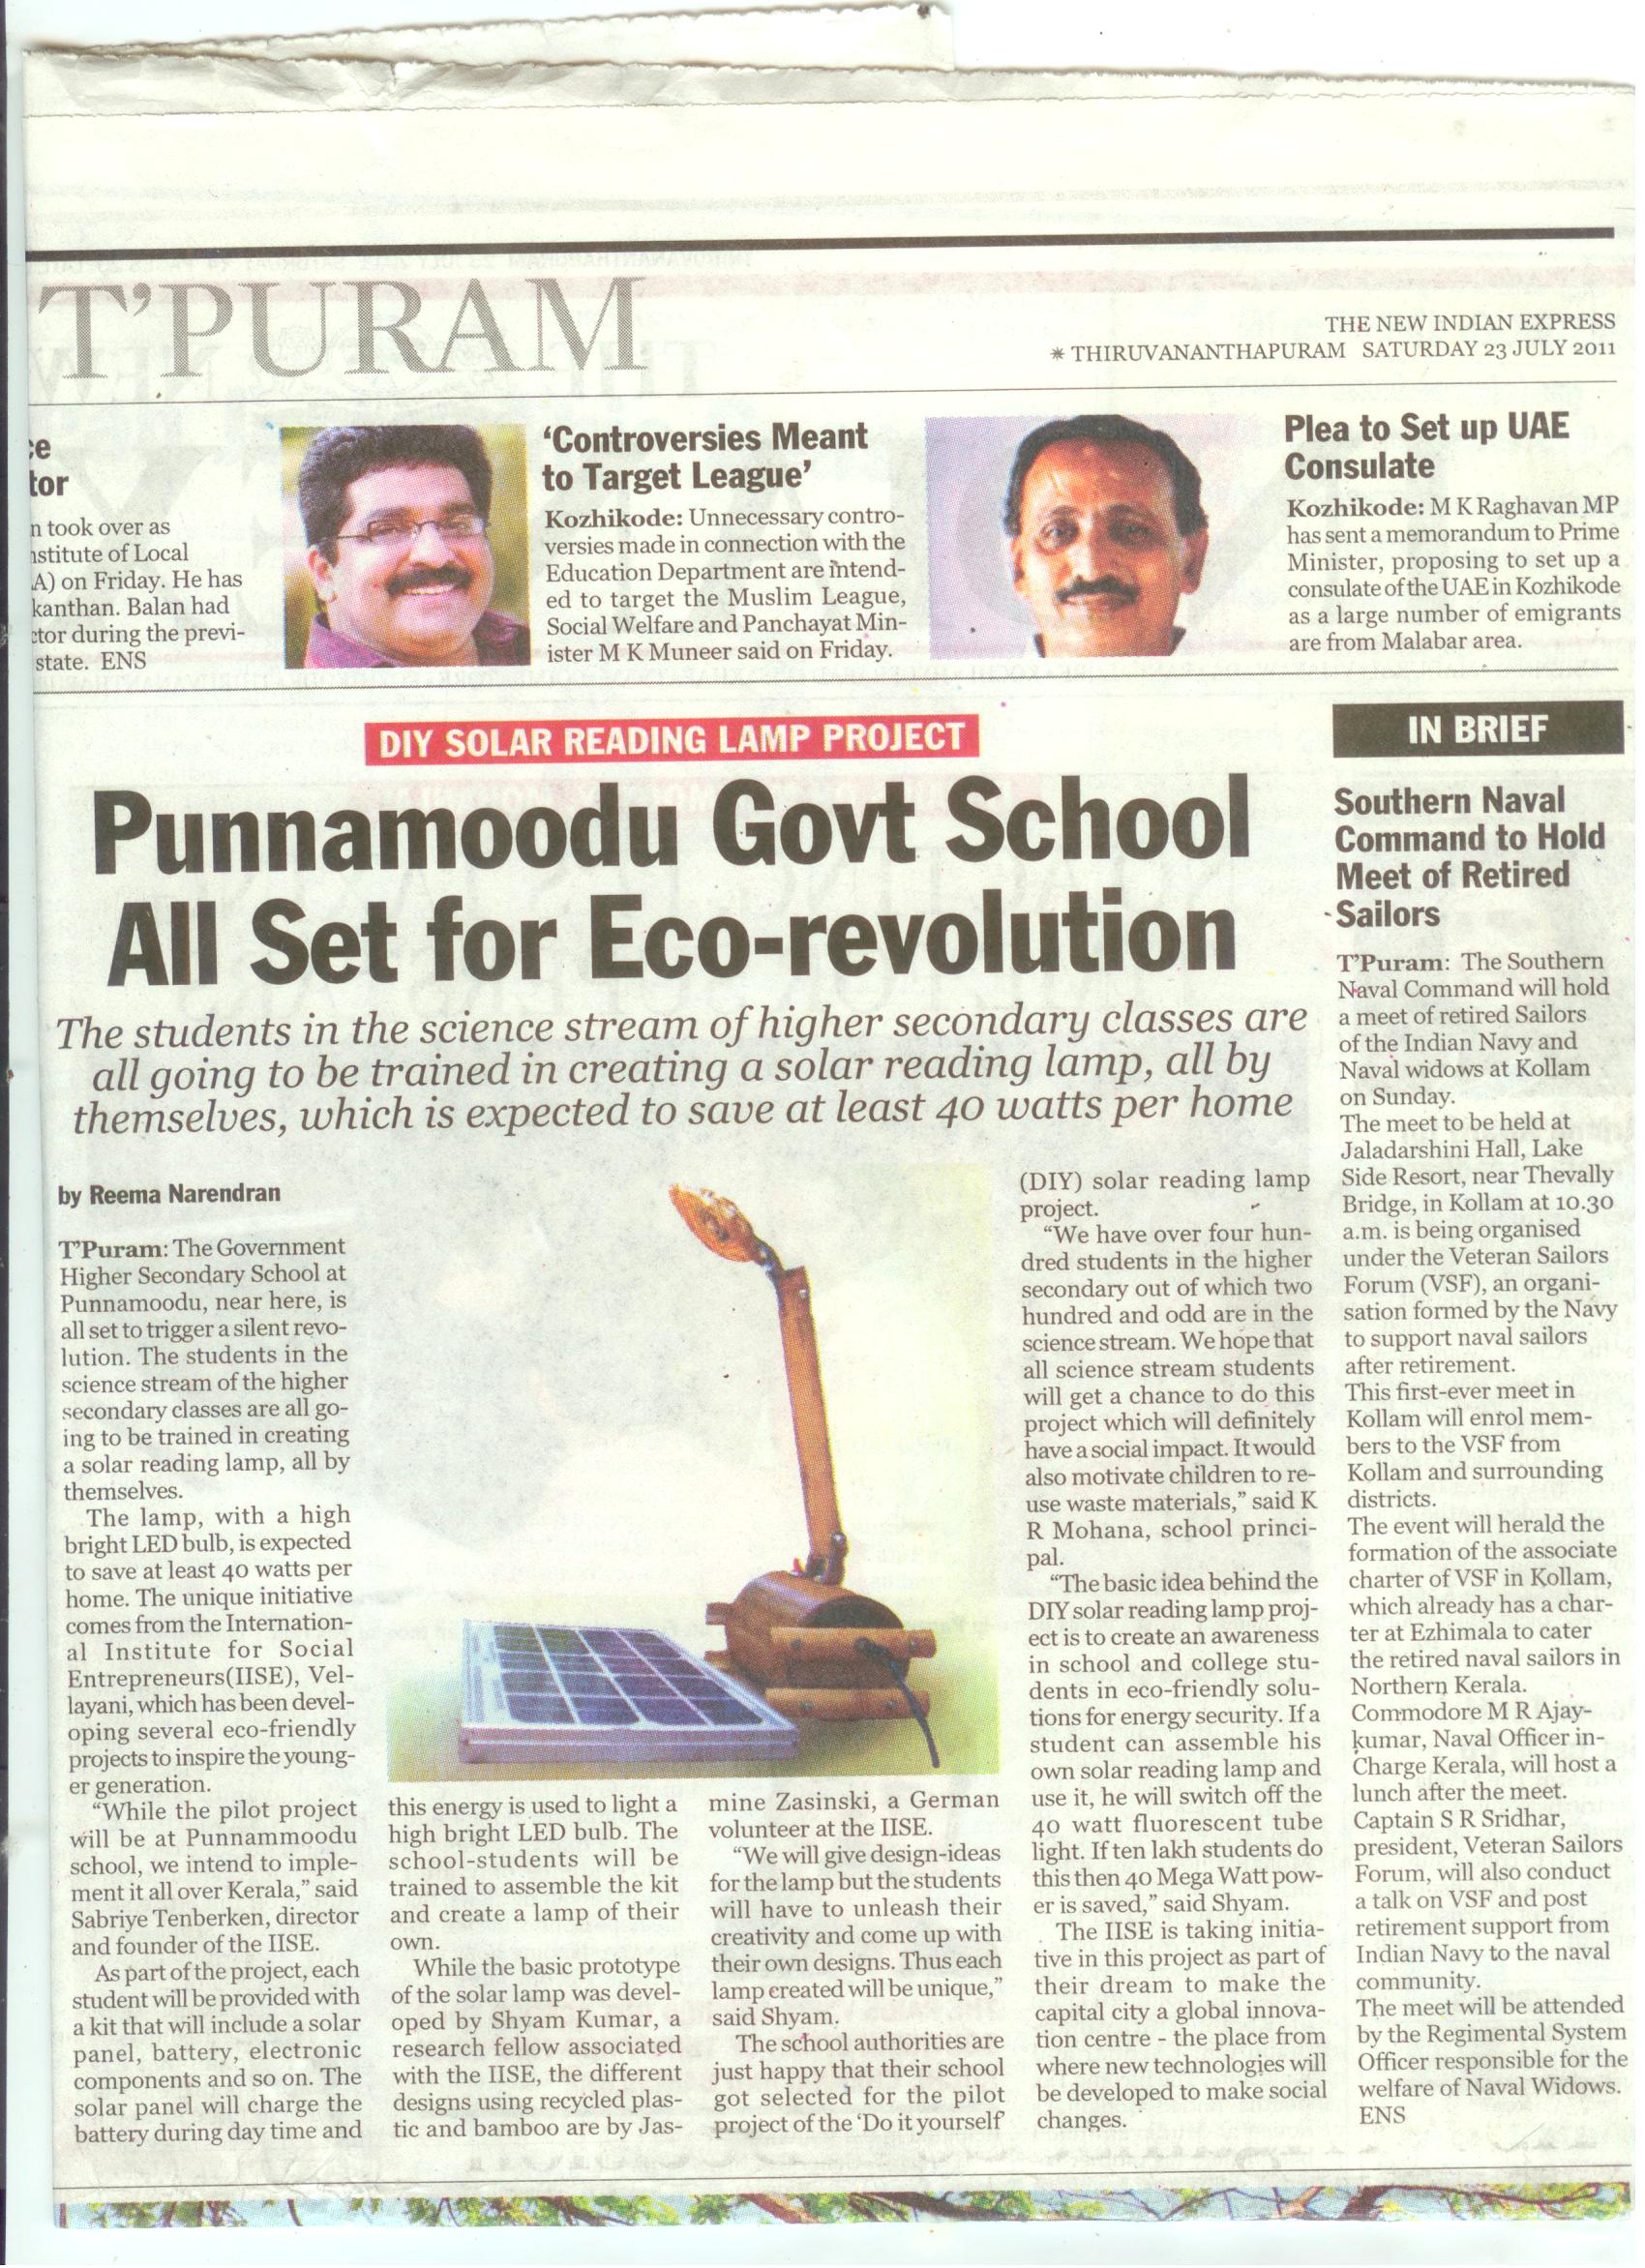 punnamoodu Govt School - All set for Eco-revolution